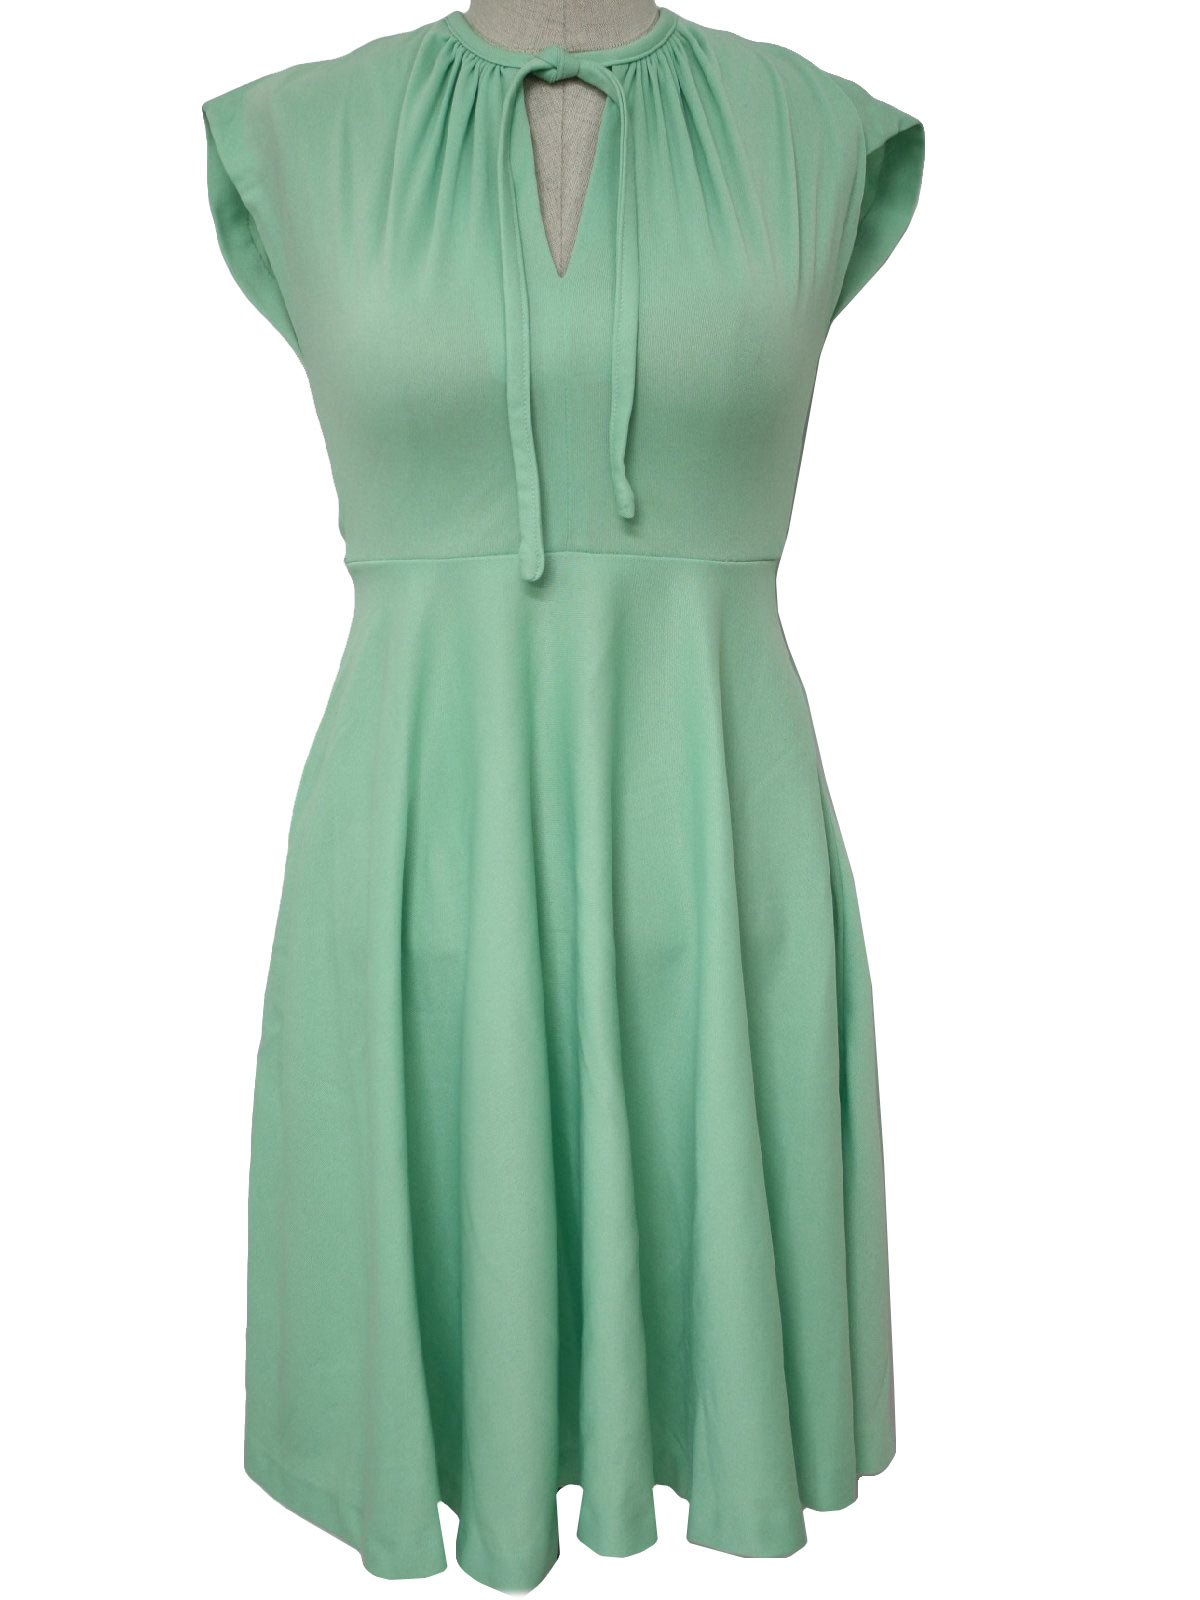 1970 s sears disco dress 70s sears womens mint green sleeveless ...